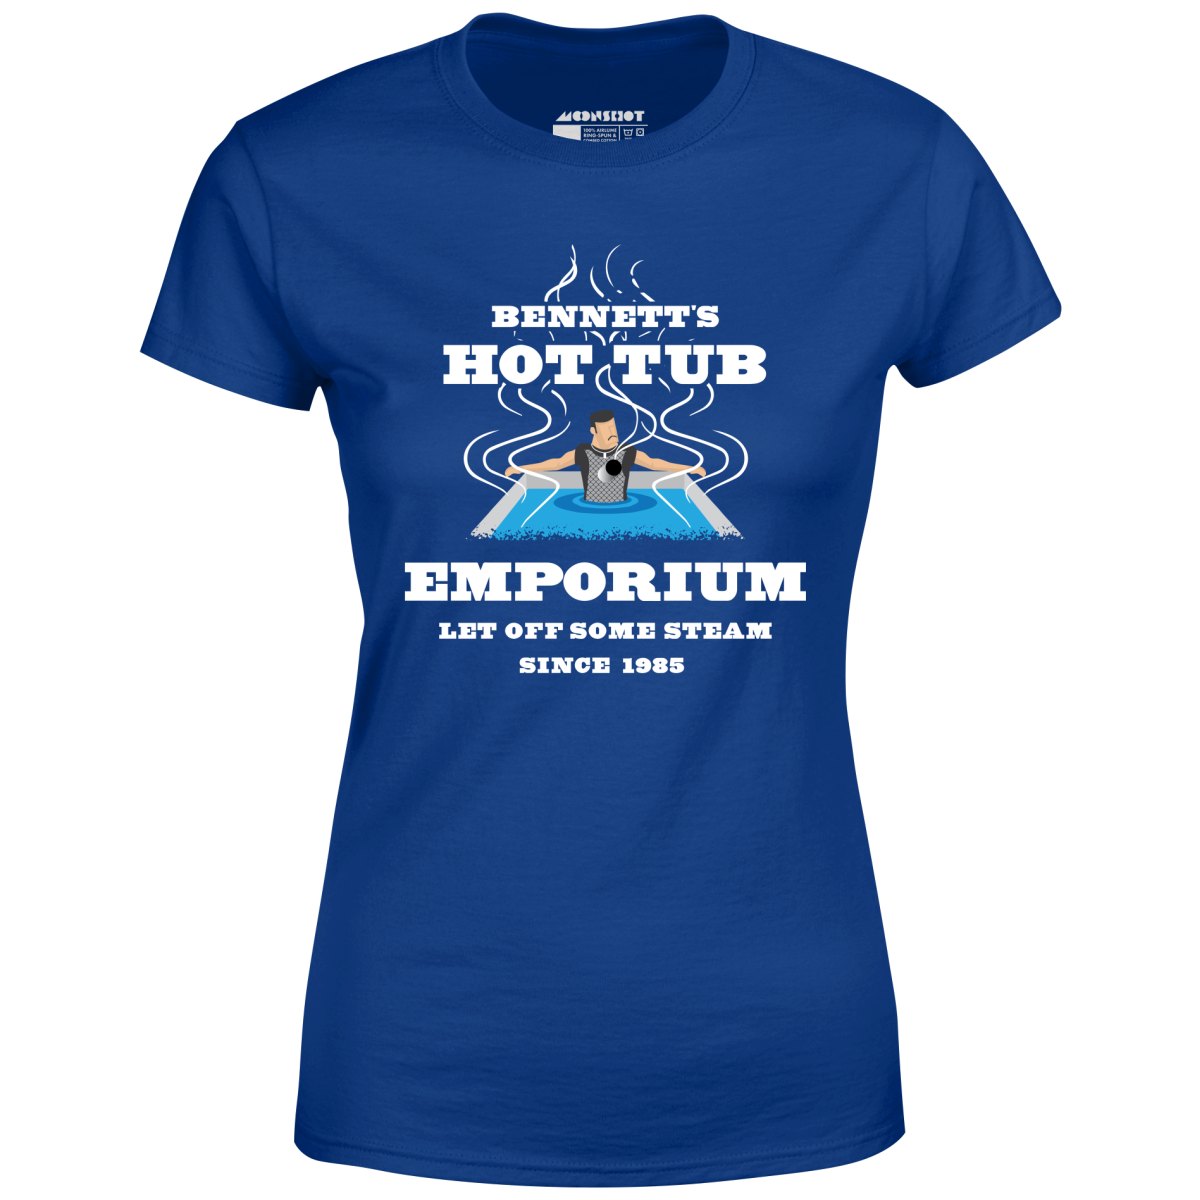 Bennett's Hot Tub Emporium - Commando - Women's T-Shirt